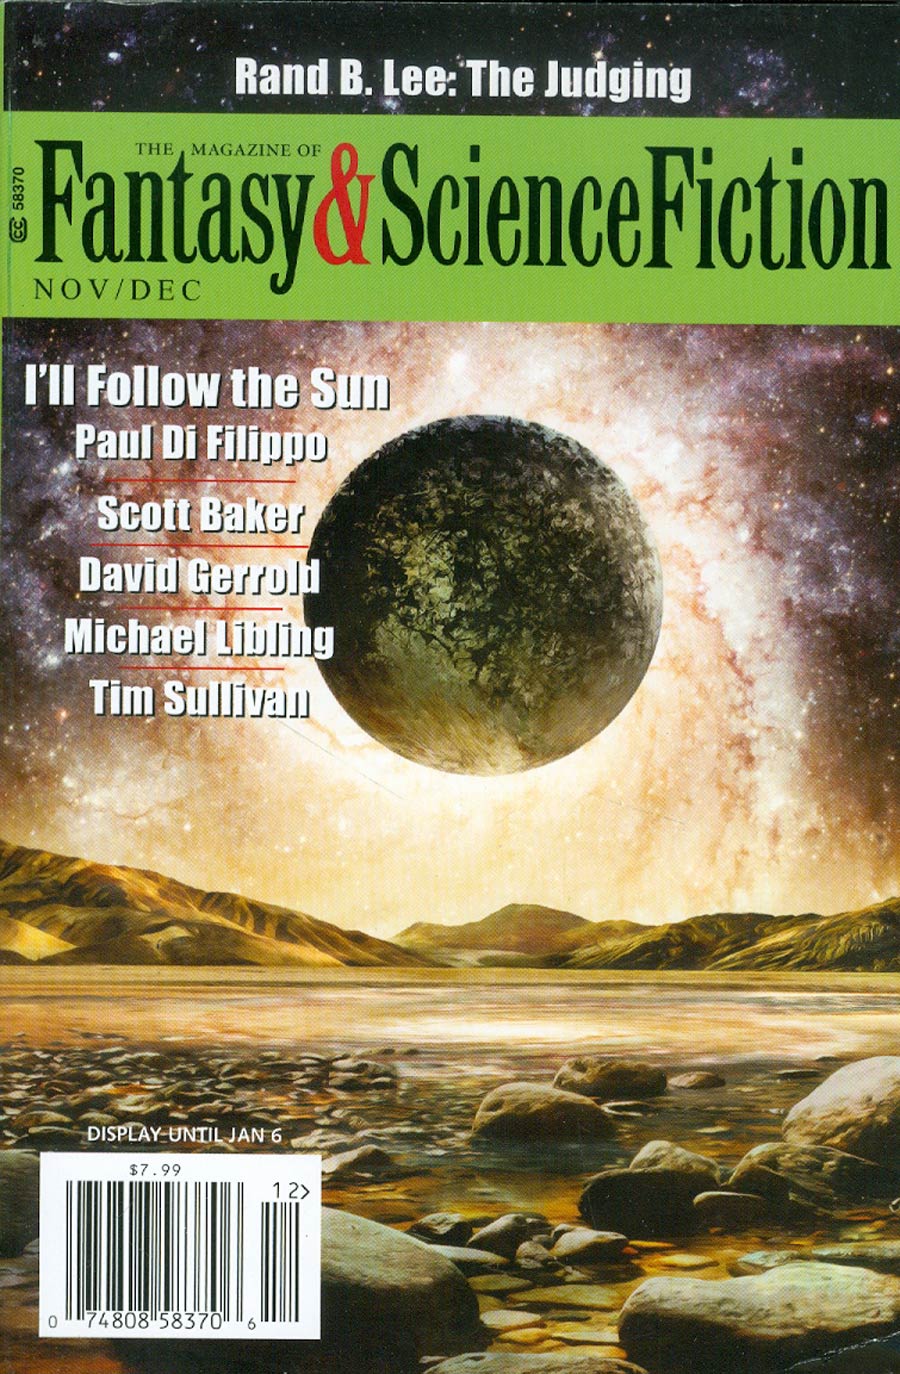 Fantasy & Science Fiction Digest Vol 127 #5 Nov / #6 Dec 2014